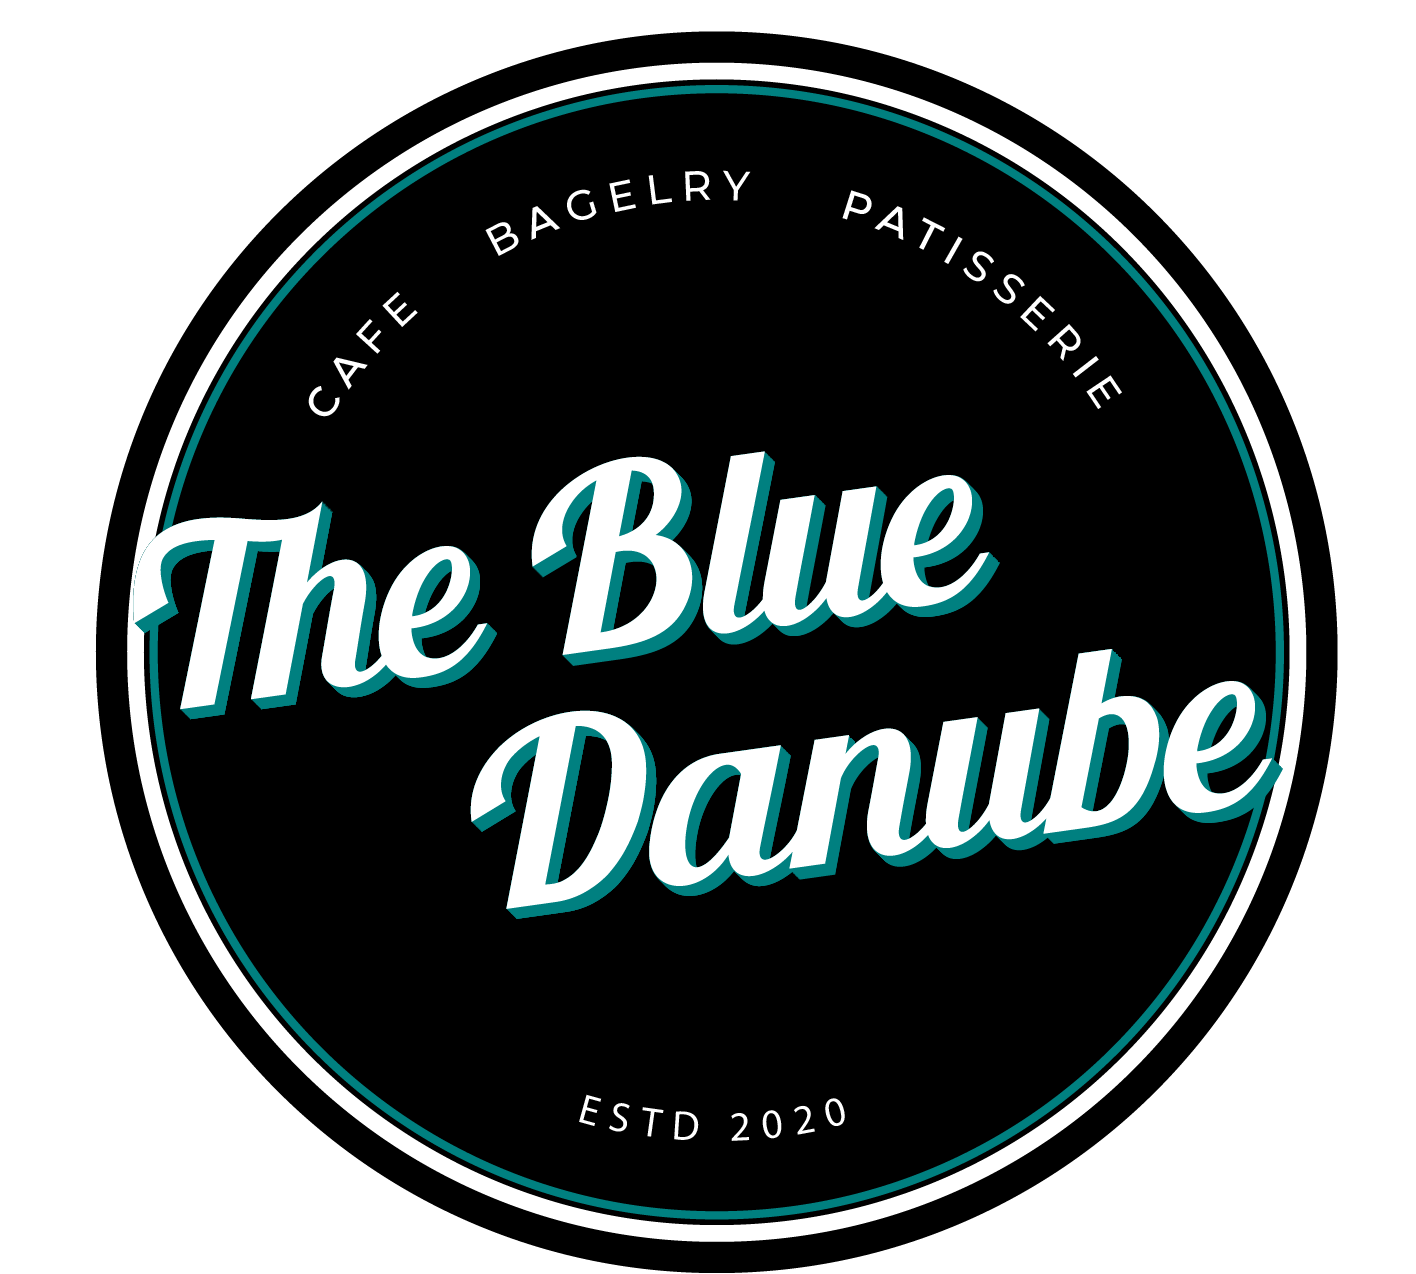 The Blue Danube - Sector 141 online delivery in Noida, Delhi, NCR,
                    Gurgaon